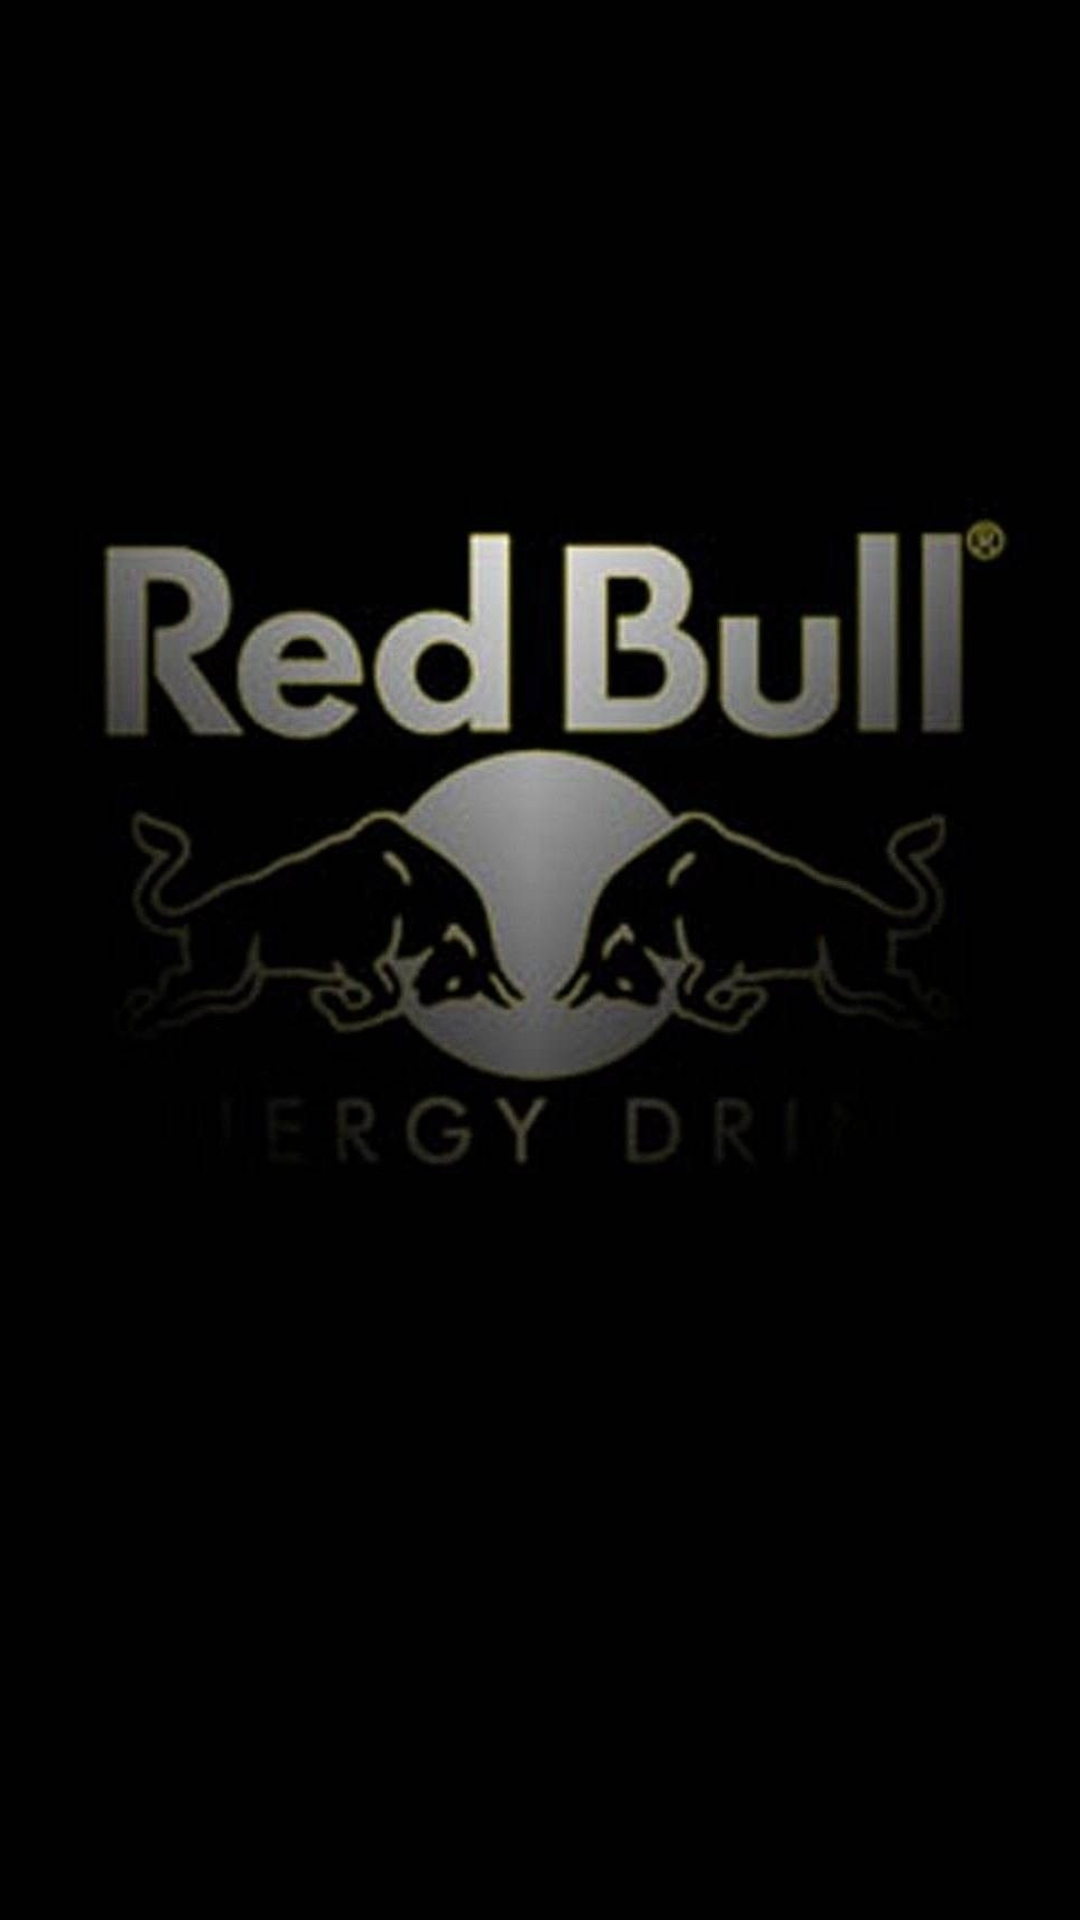 Red Bull Logo: A drink containing sugar, taurine, glucuronolactone and caffeine, Monochrome. 1080x1920 Full HD Background.